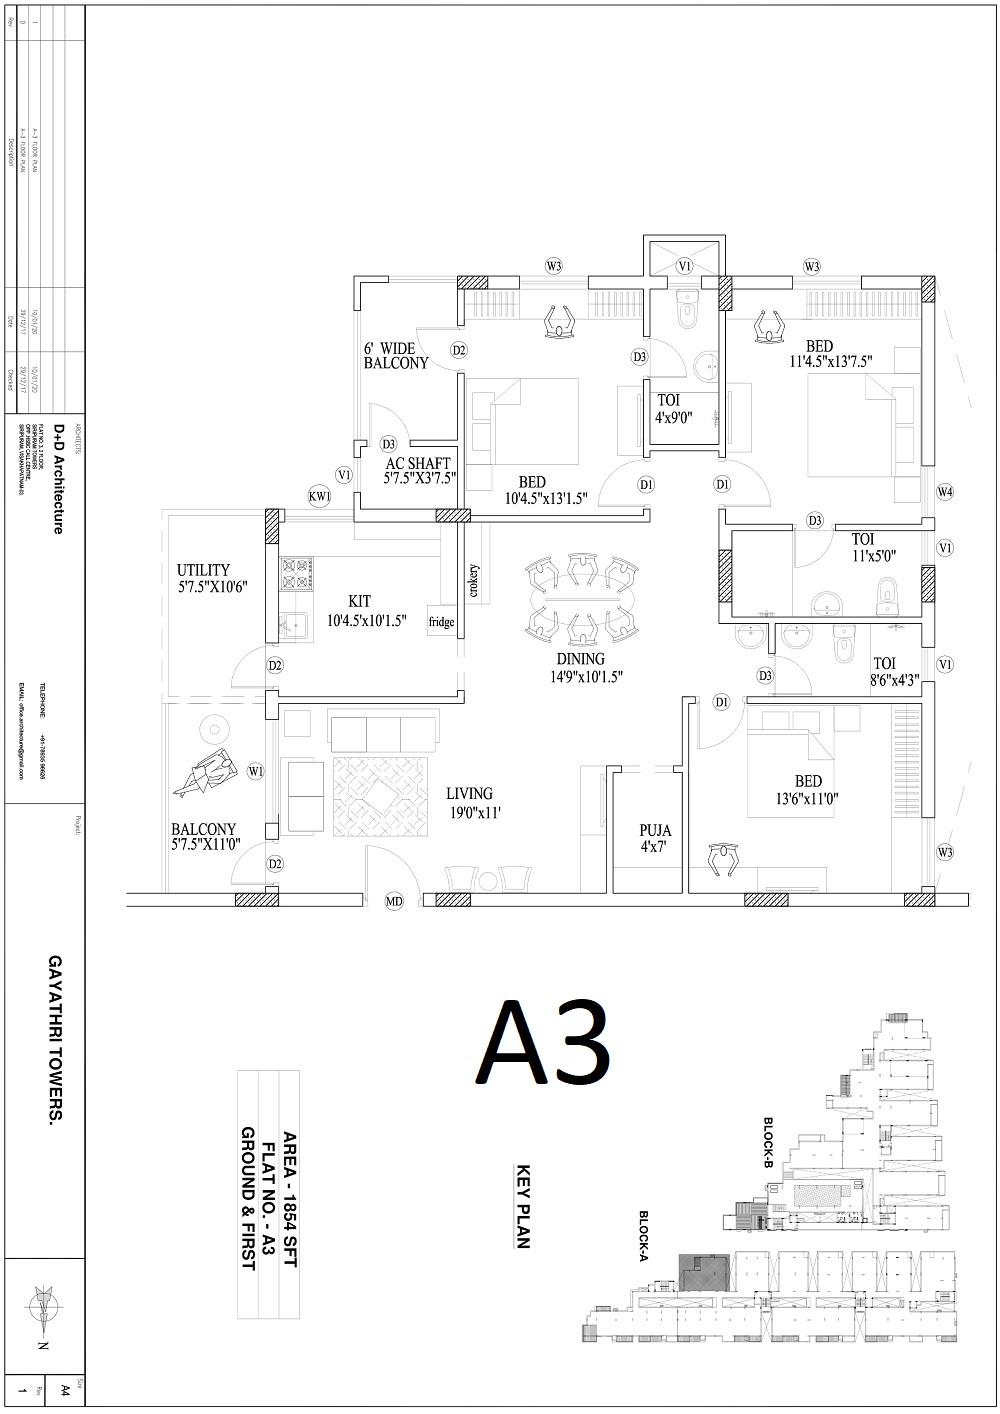 A3 - Floor Plan